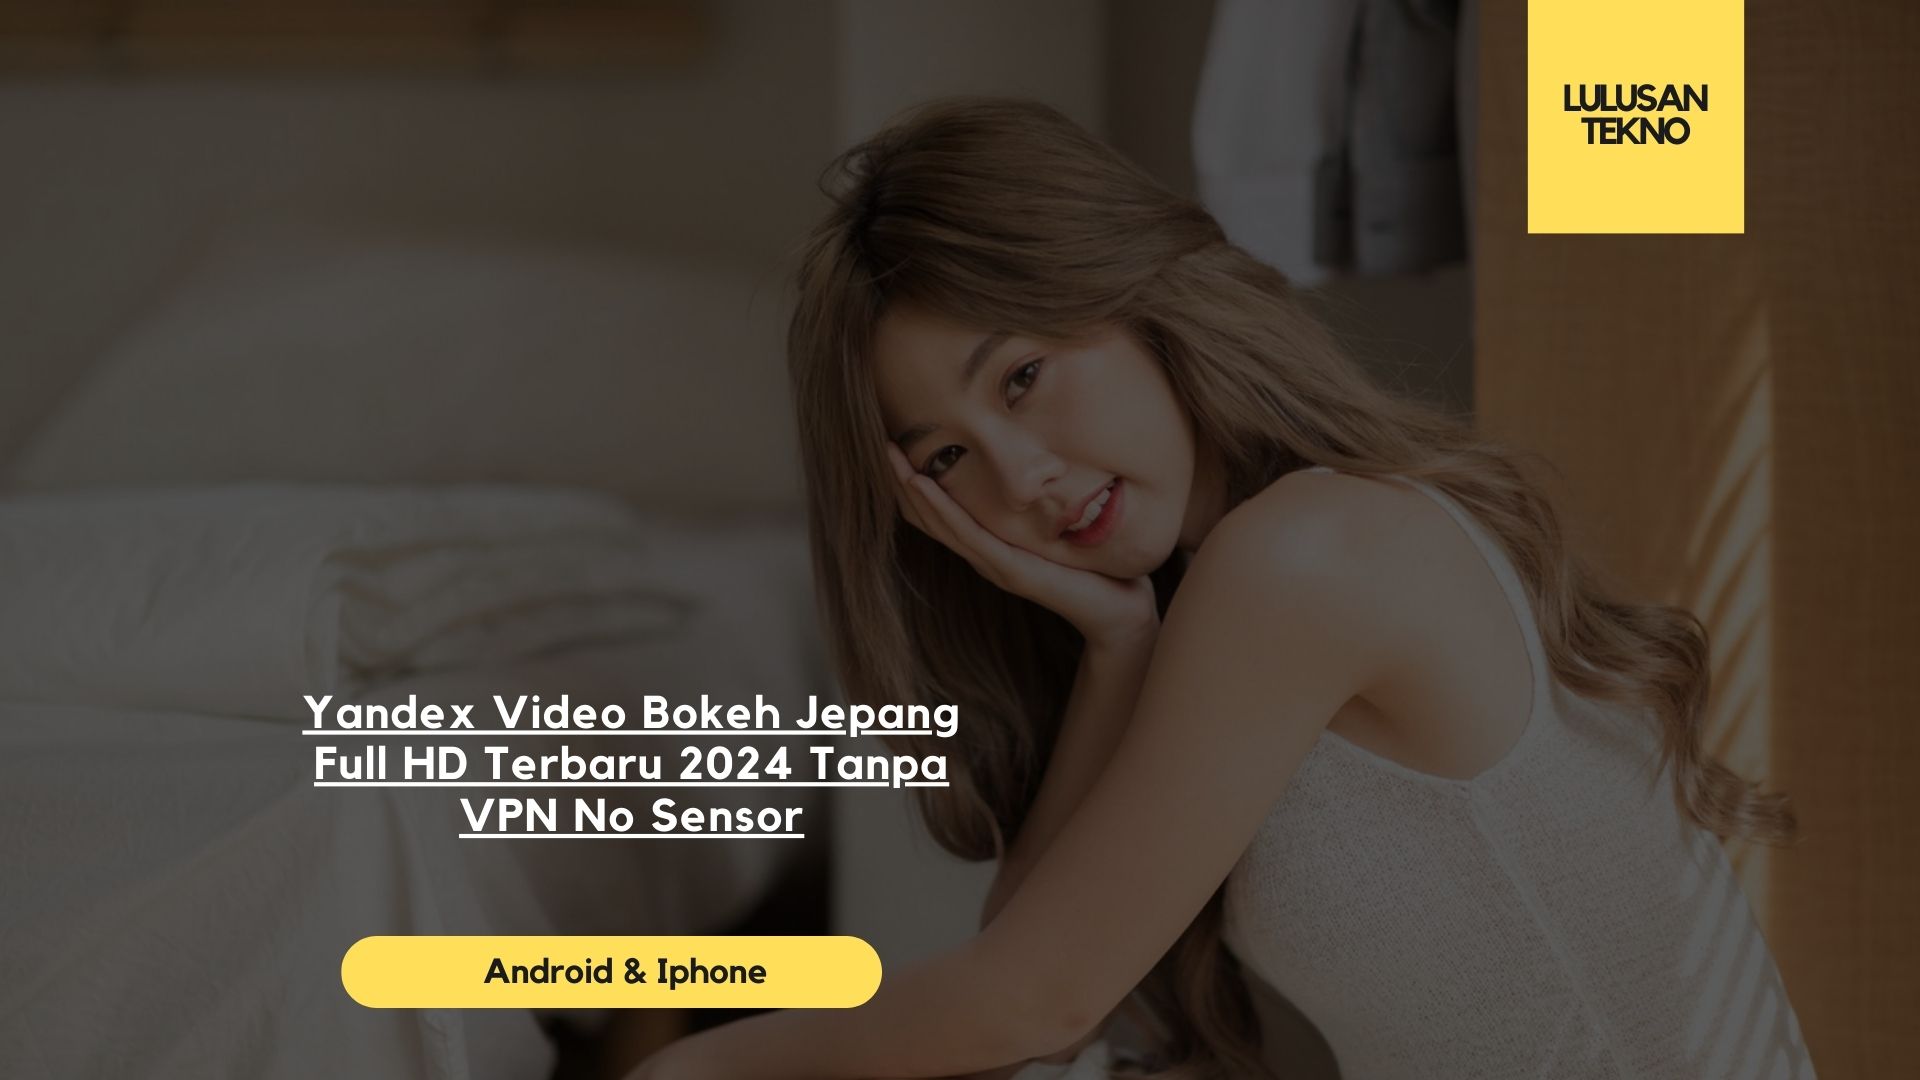 Yandex Video Bokeh Jepang Full HD Terbaru 2024 Tanpa VPN No Sensor